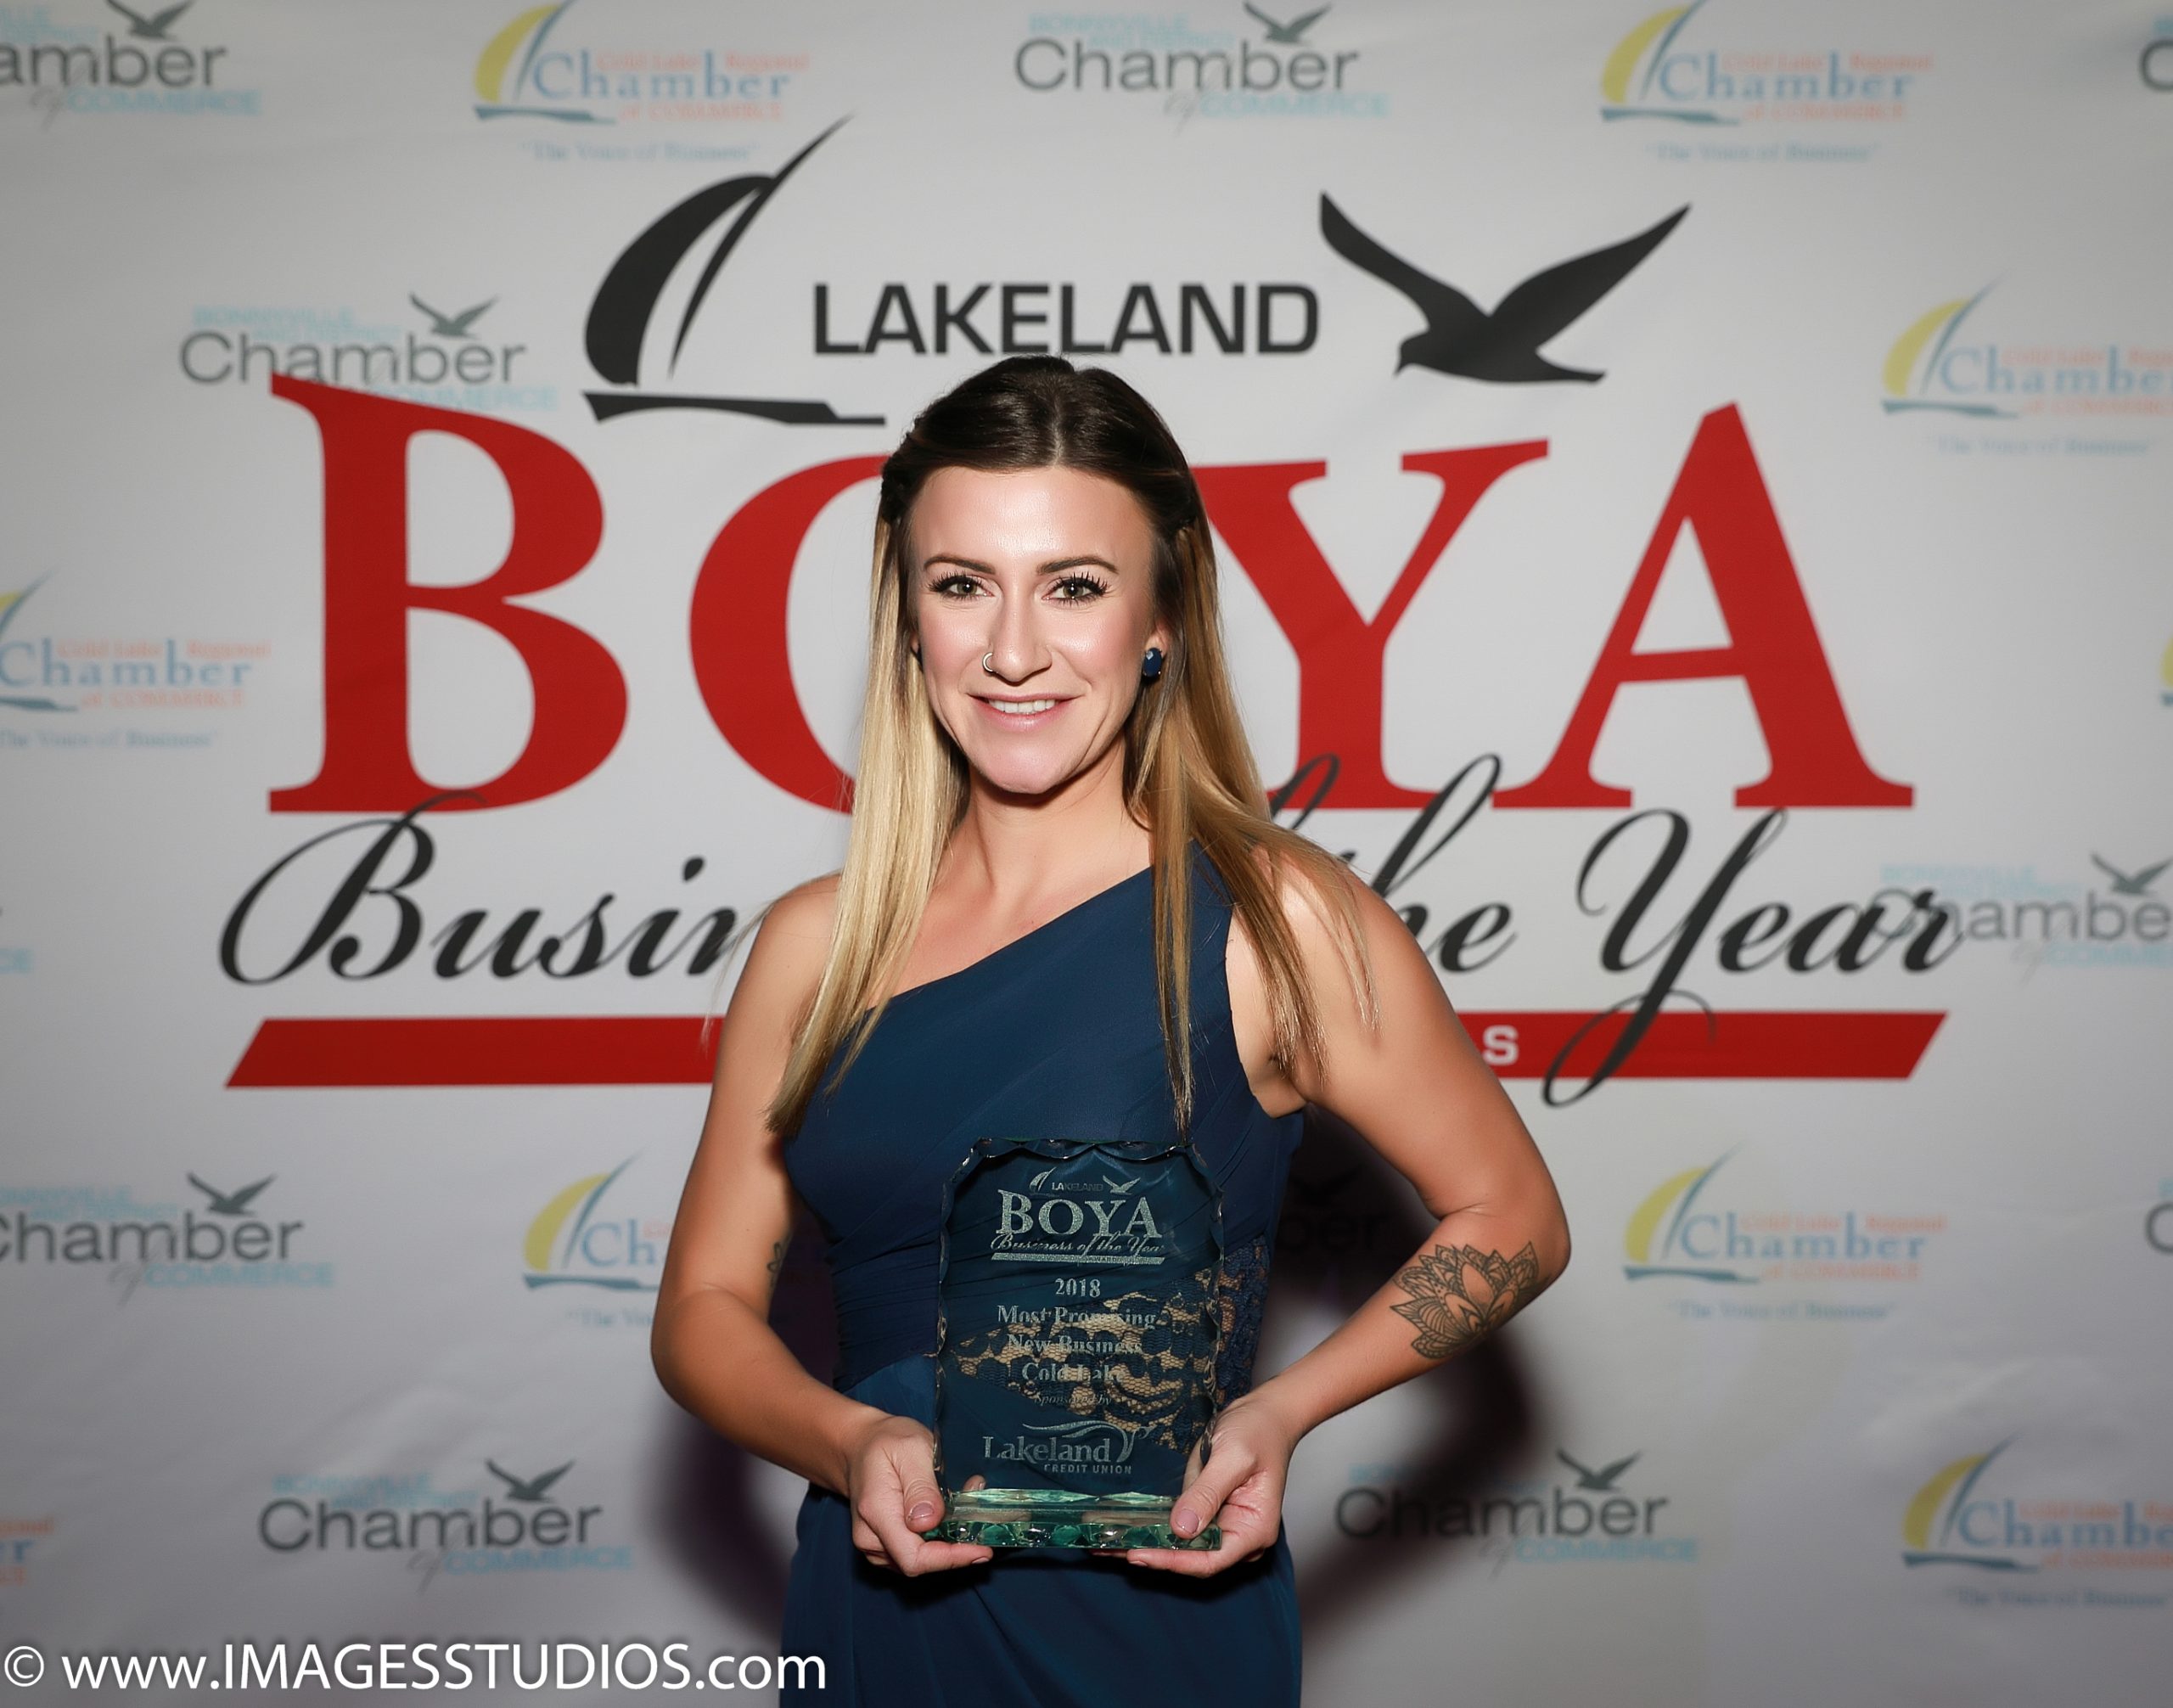 Lakeland Business of the Year Awards